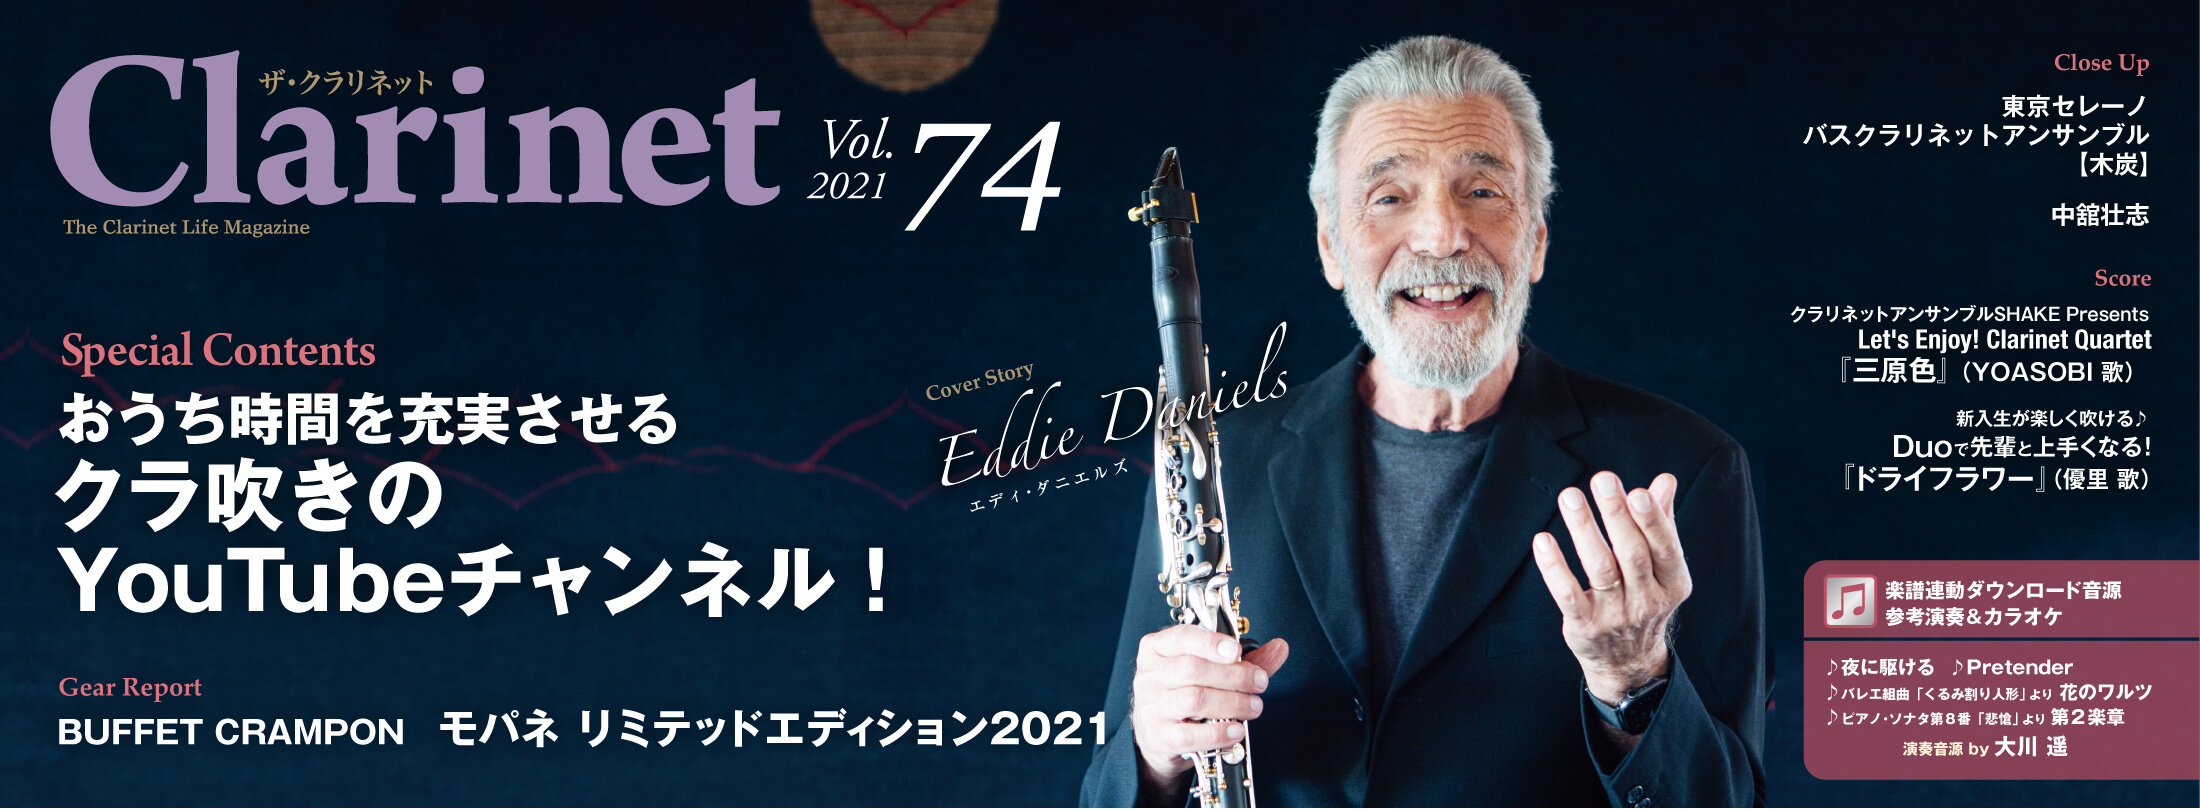 The Clarinet 74号